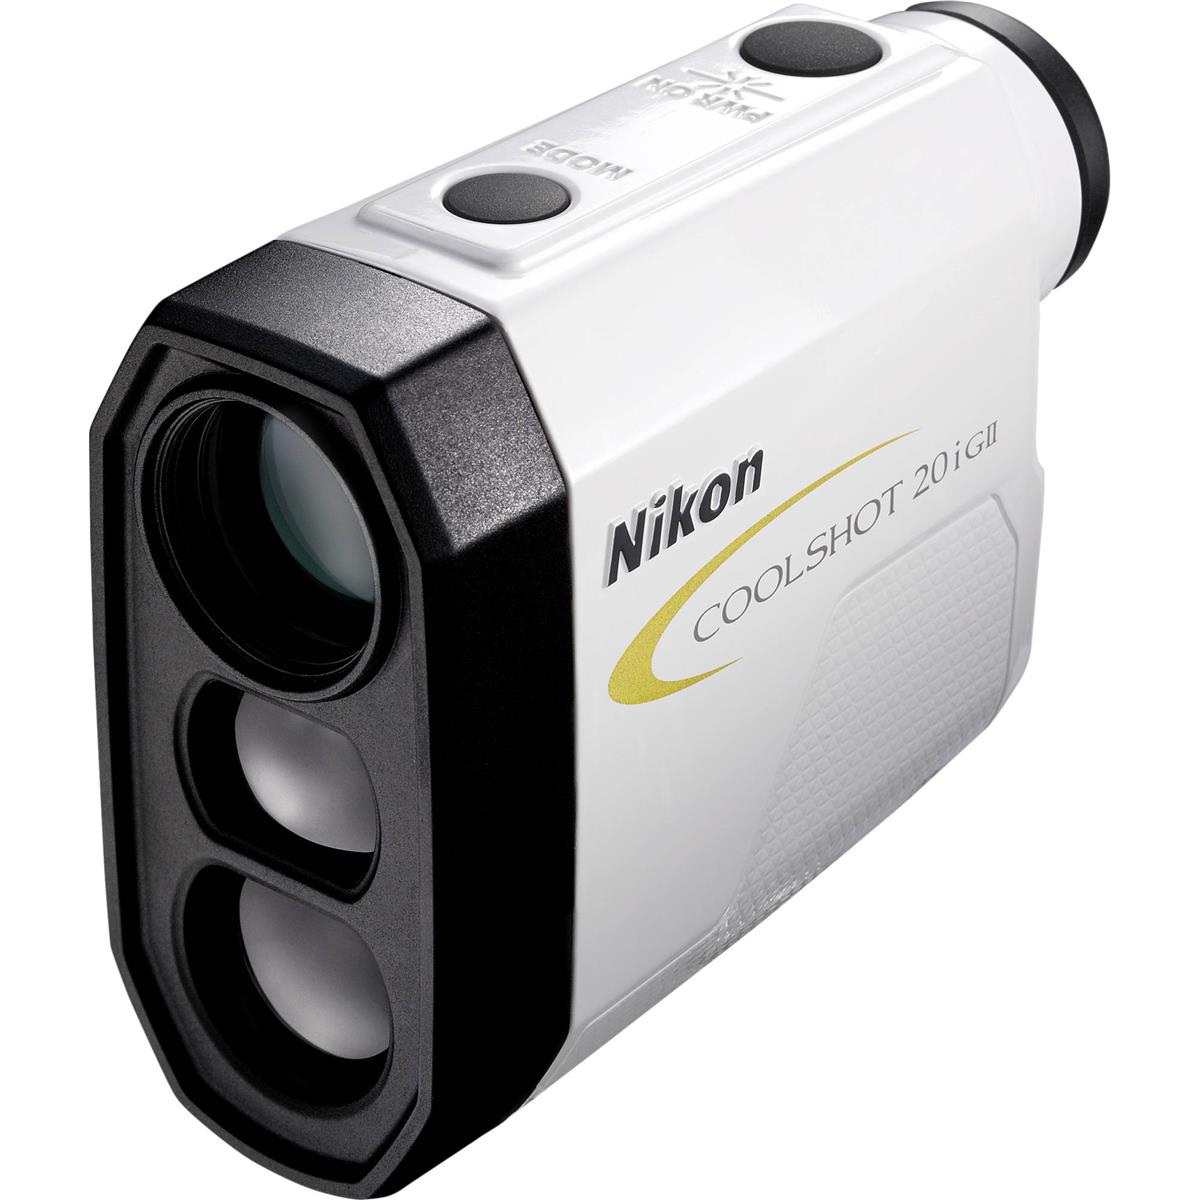 Nikon 6x20 COOLSHOT 20i GII Golf Laser Rangefinder, 800 Yards - Refurbished -  16666B